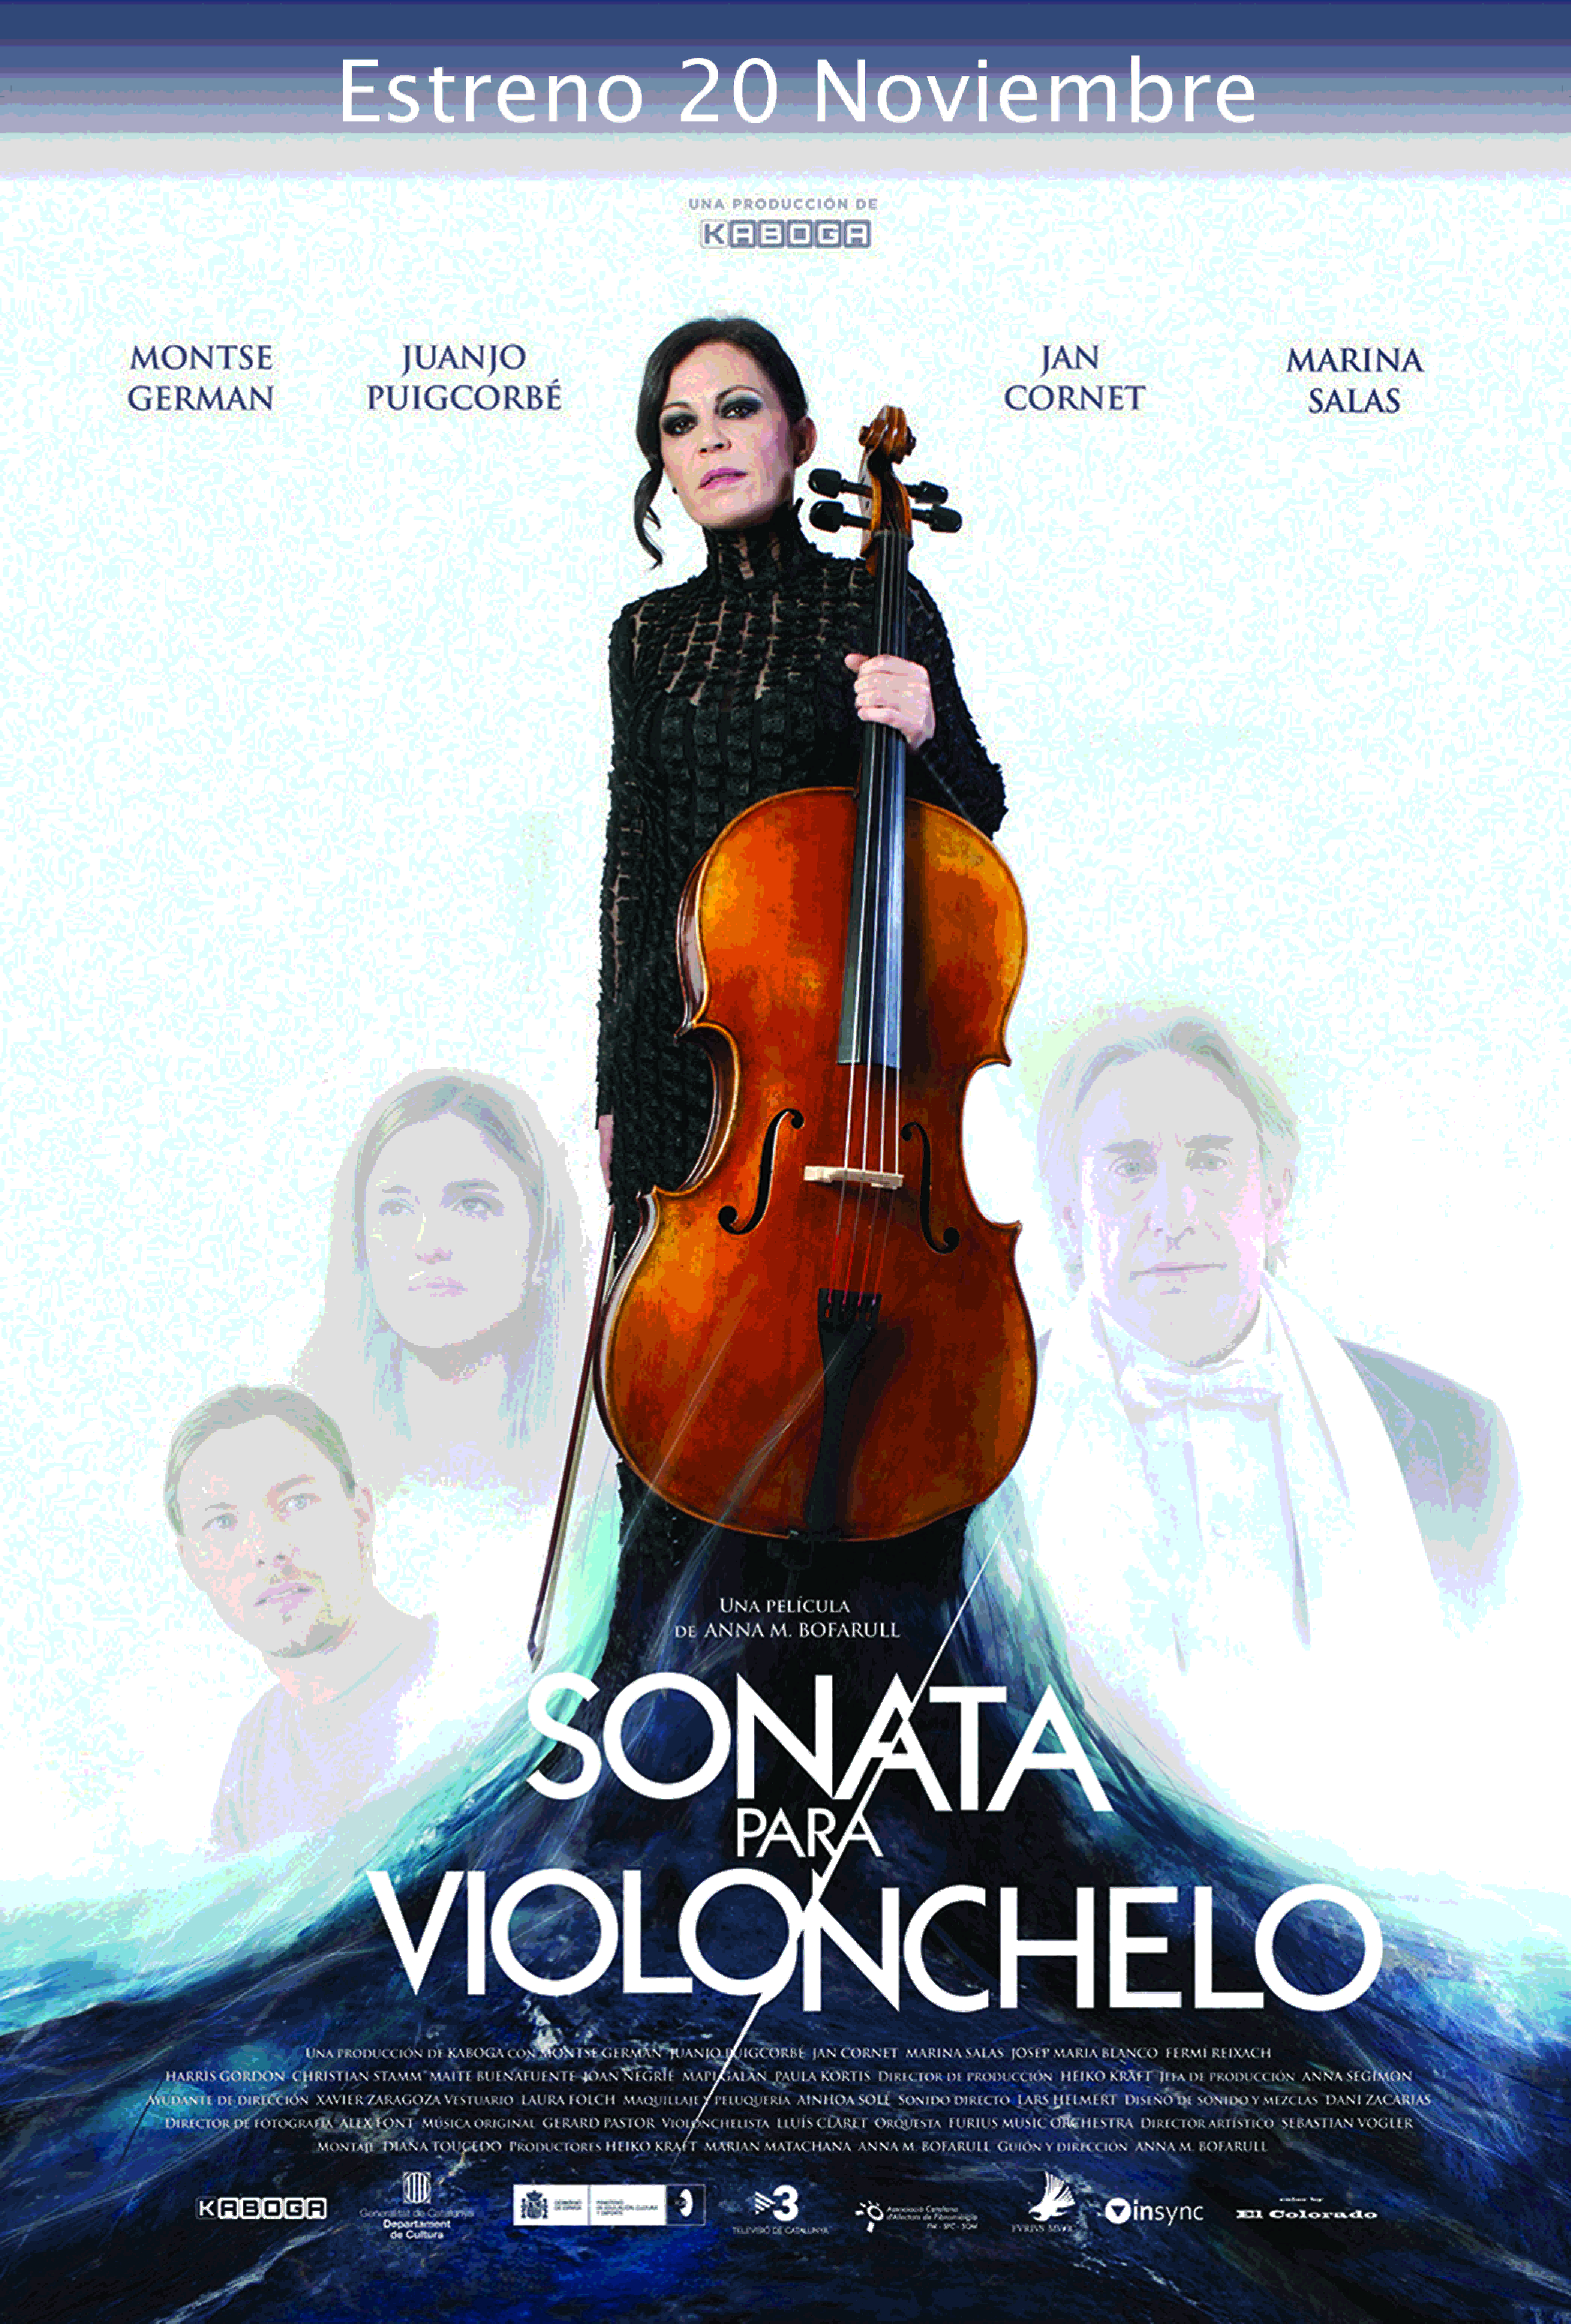 Sonata para violonchelo, by Anna M. Bofarull